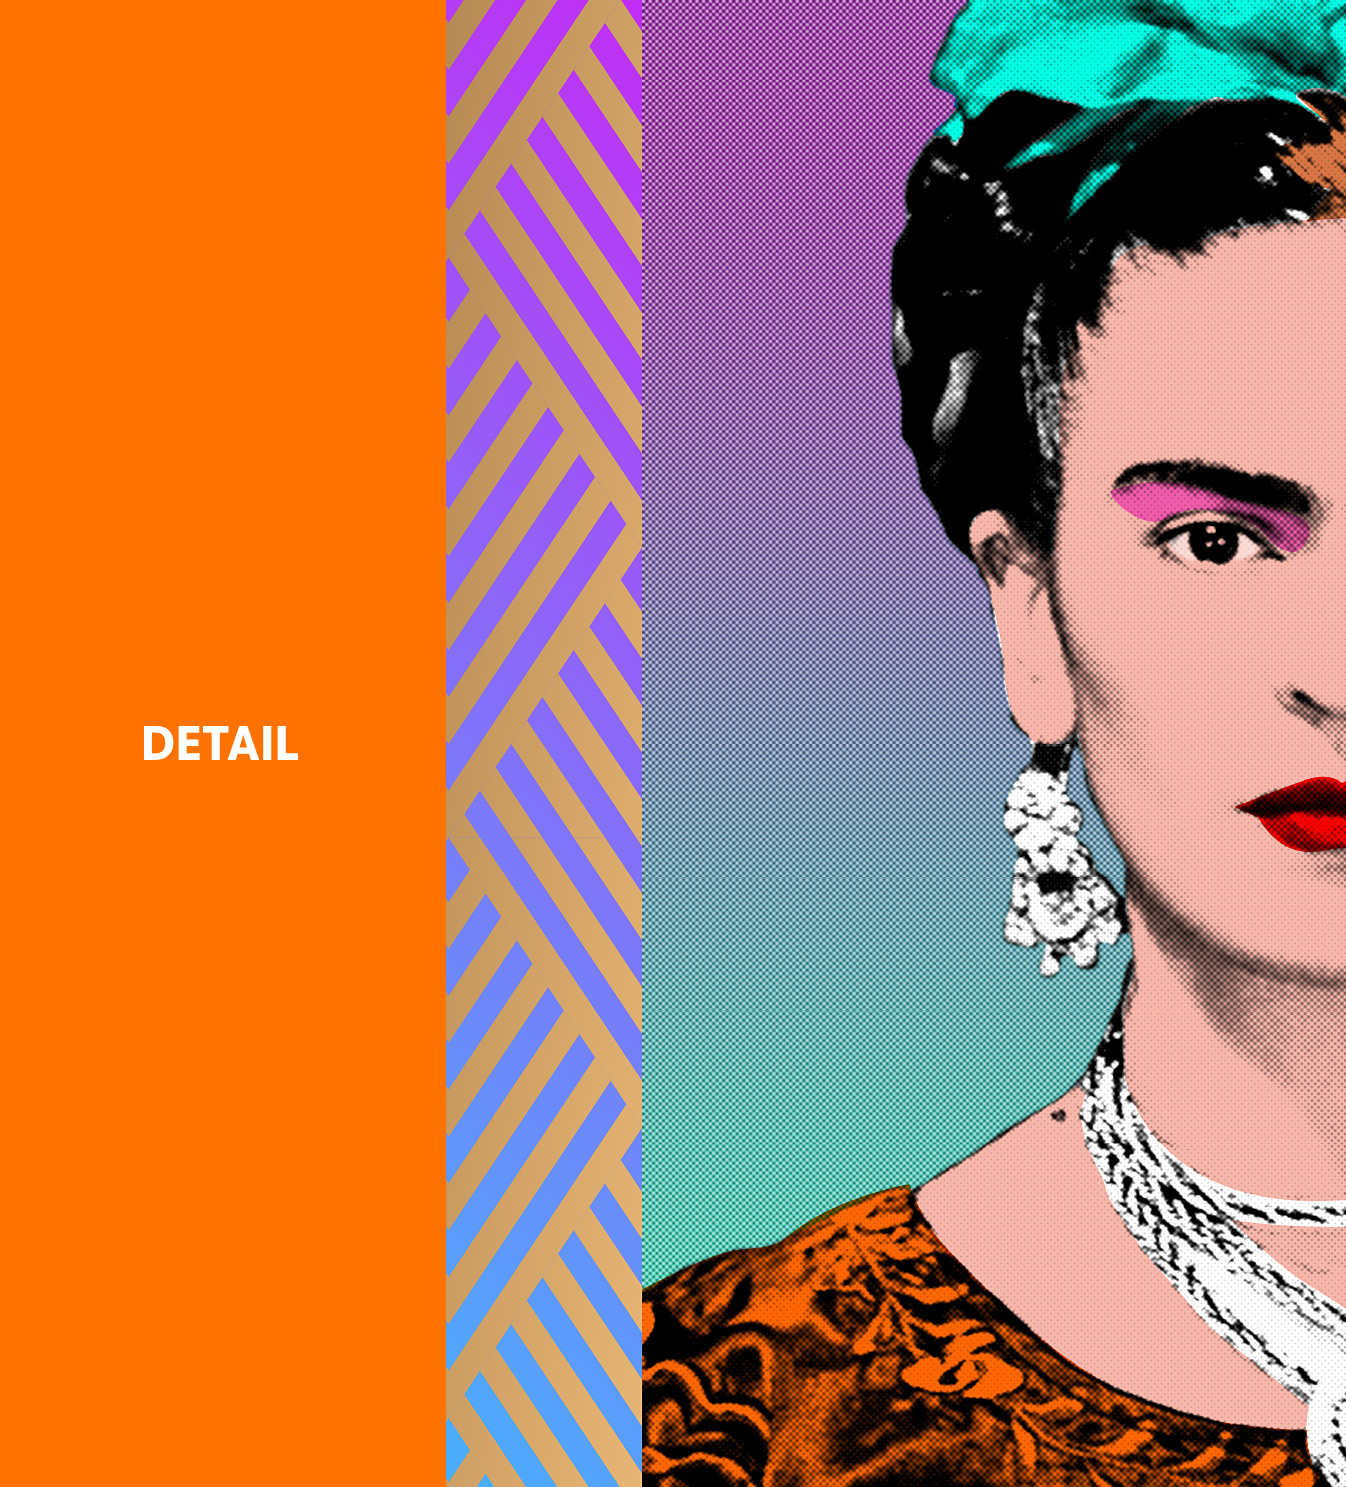 Frida Kahlo Poster